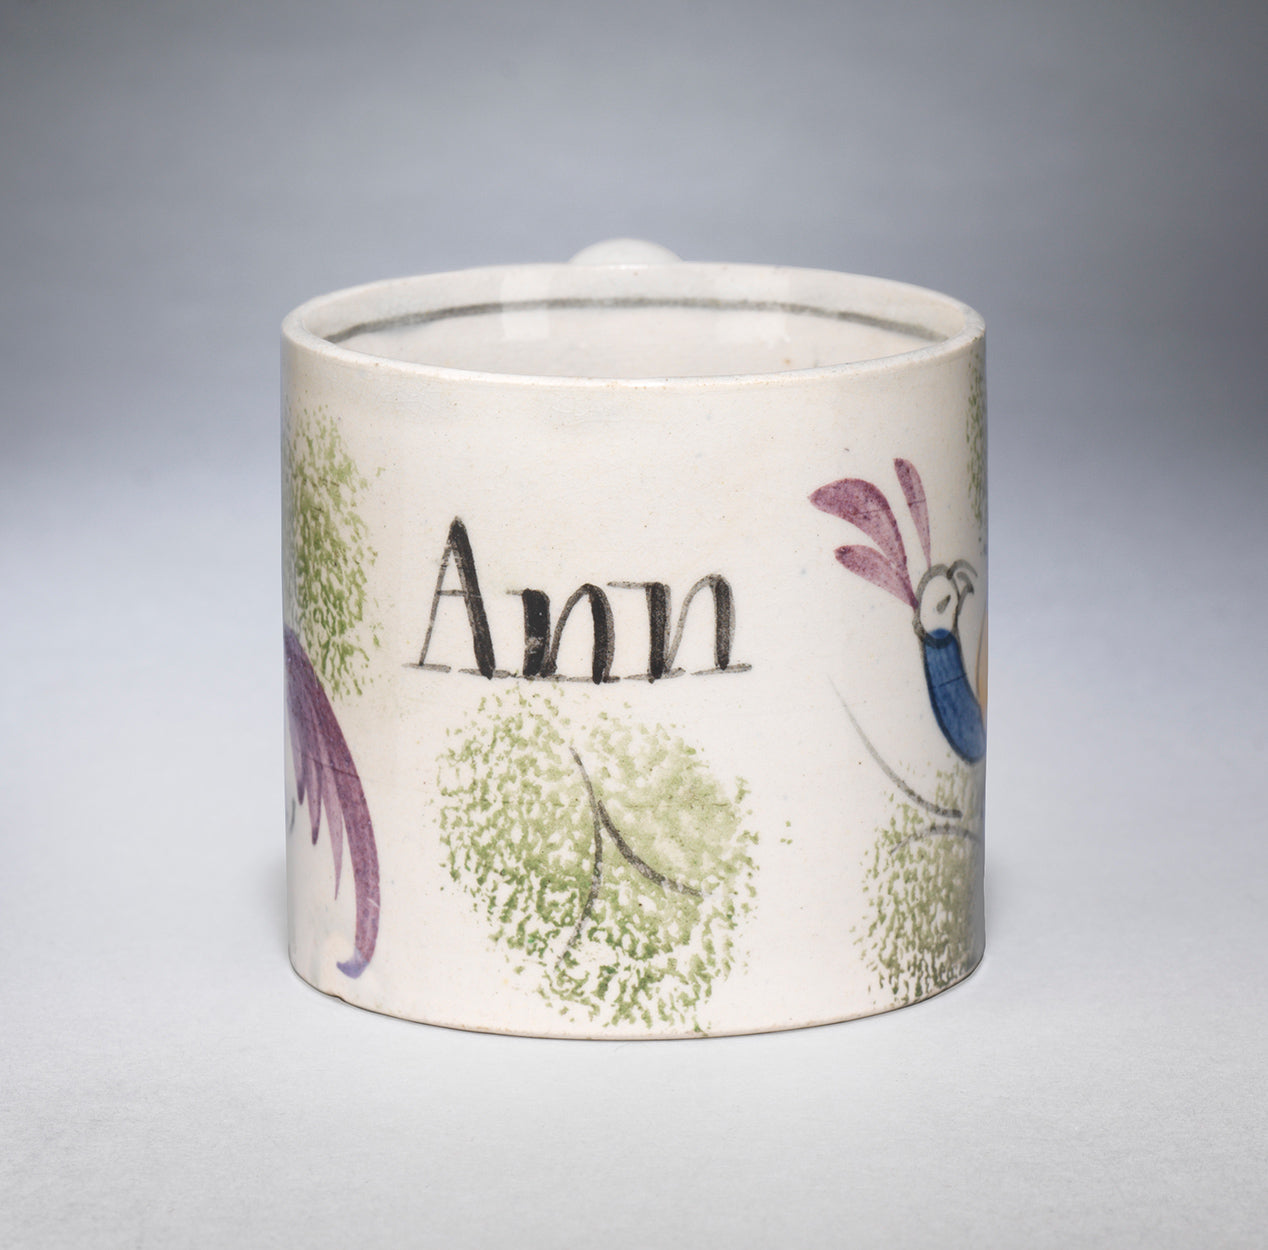 “Anne” Personalised Child’s Mug